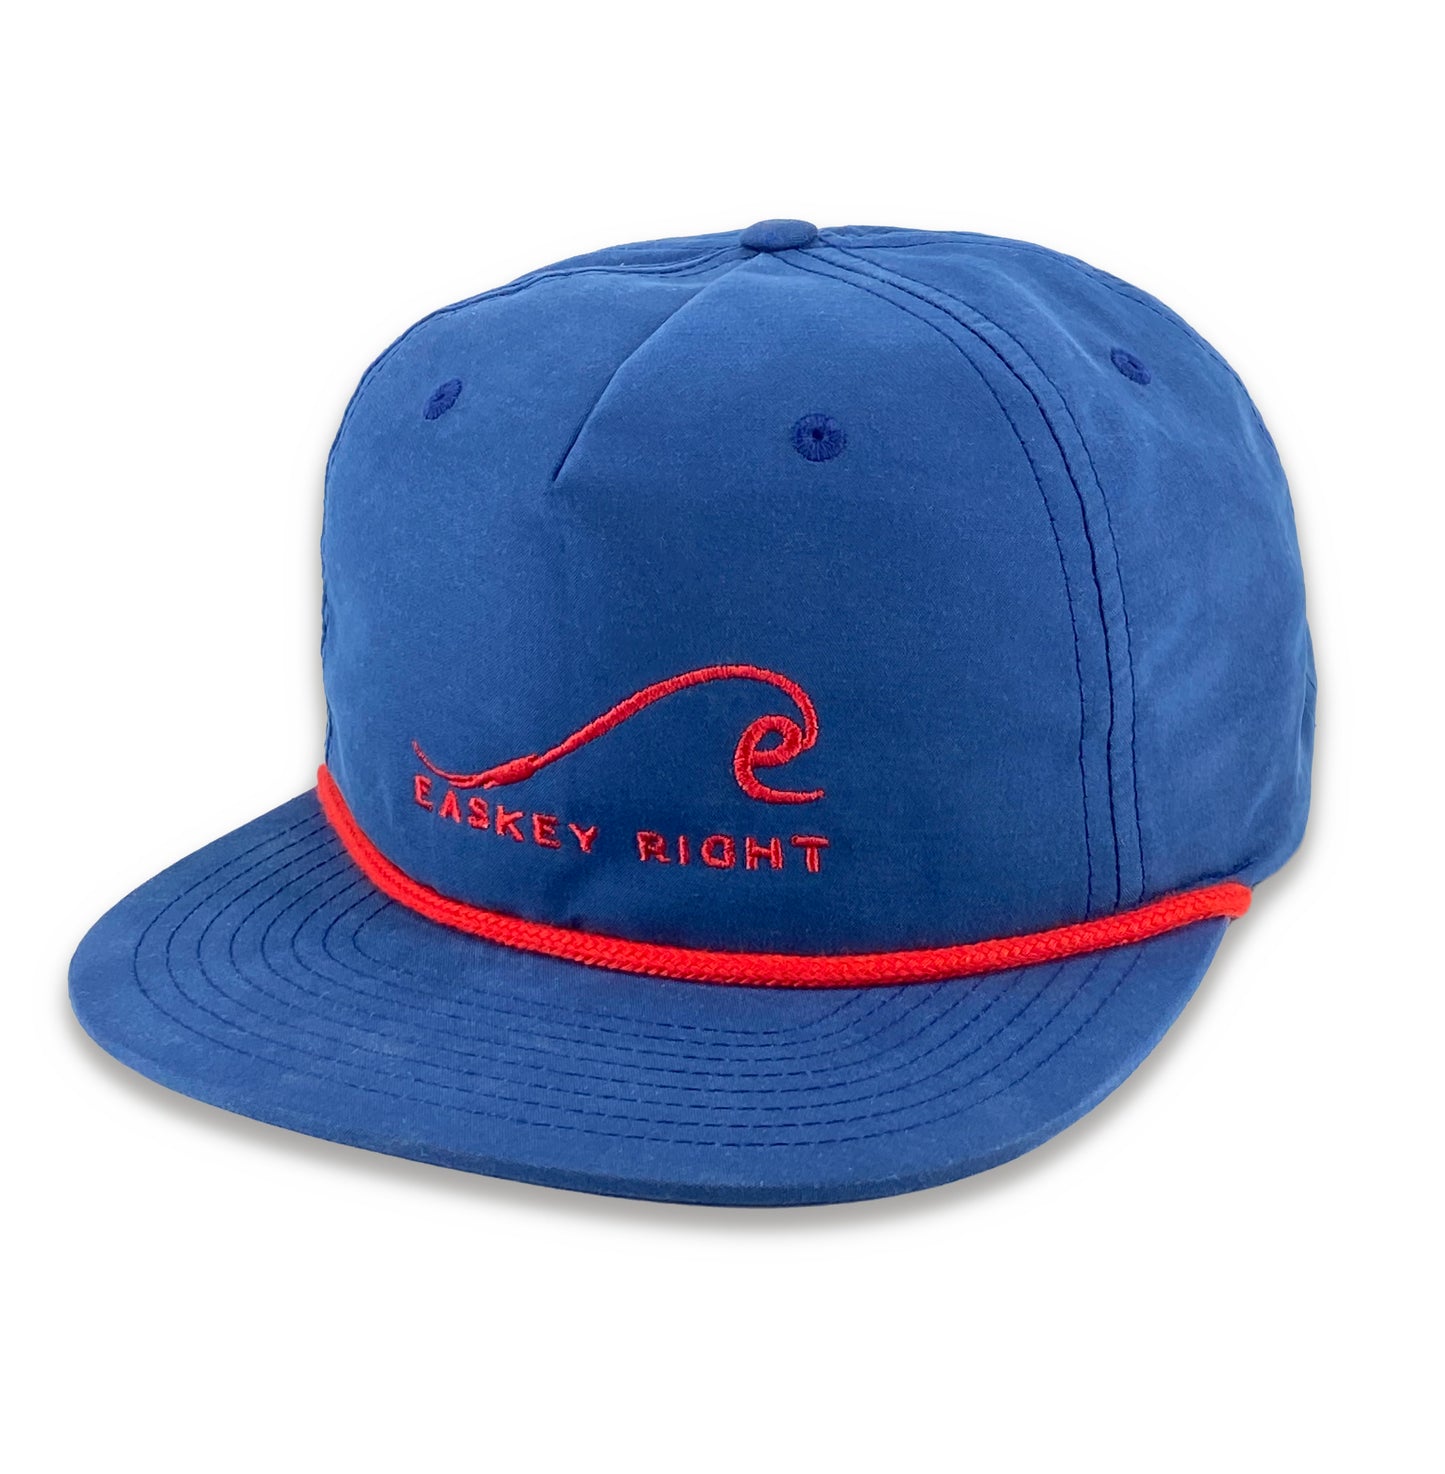 Springtide Hat - Navy